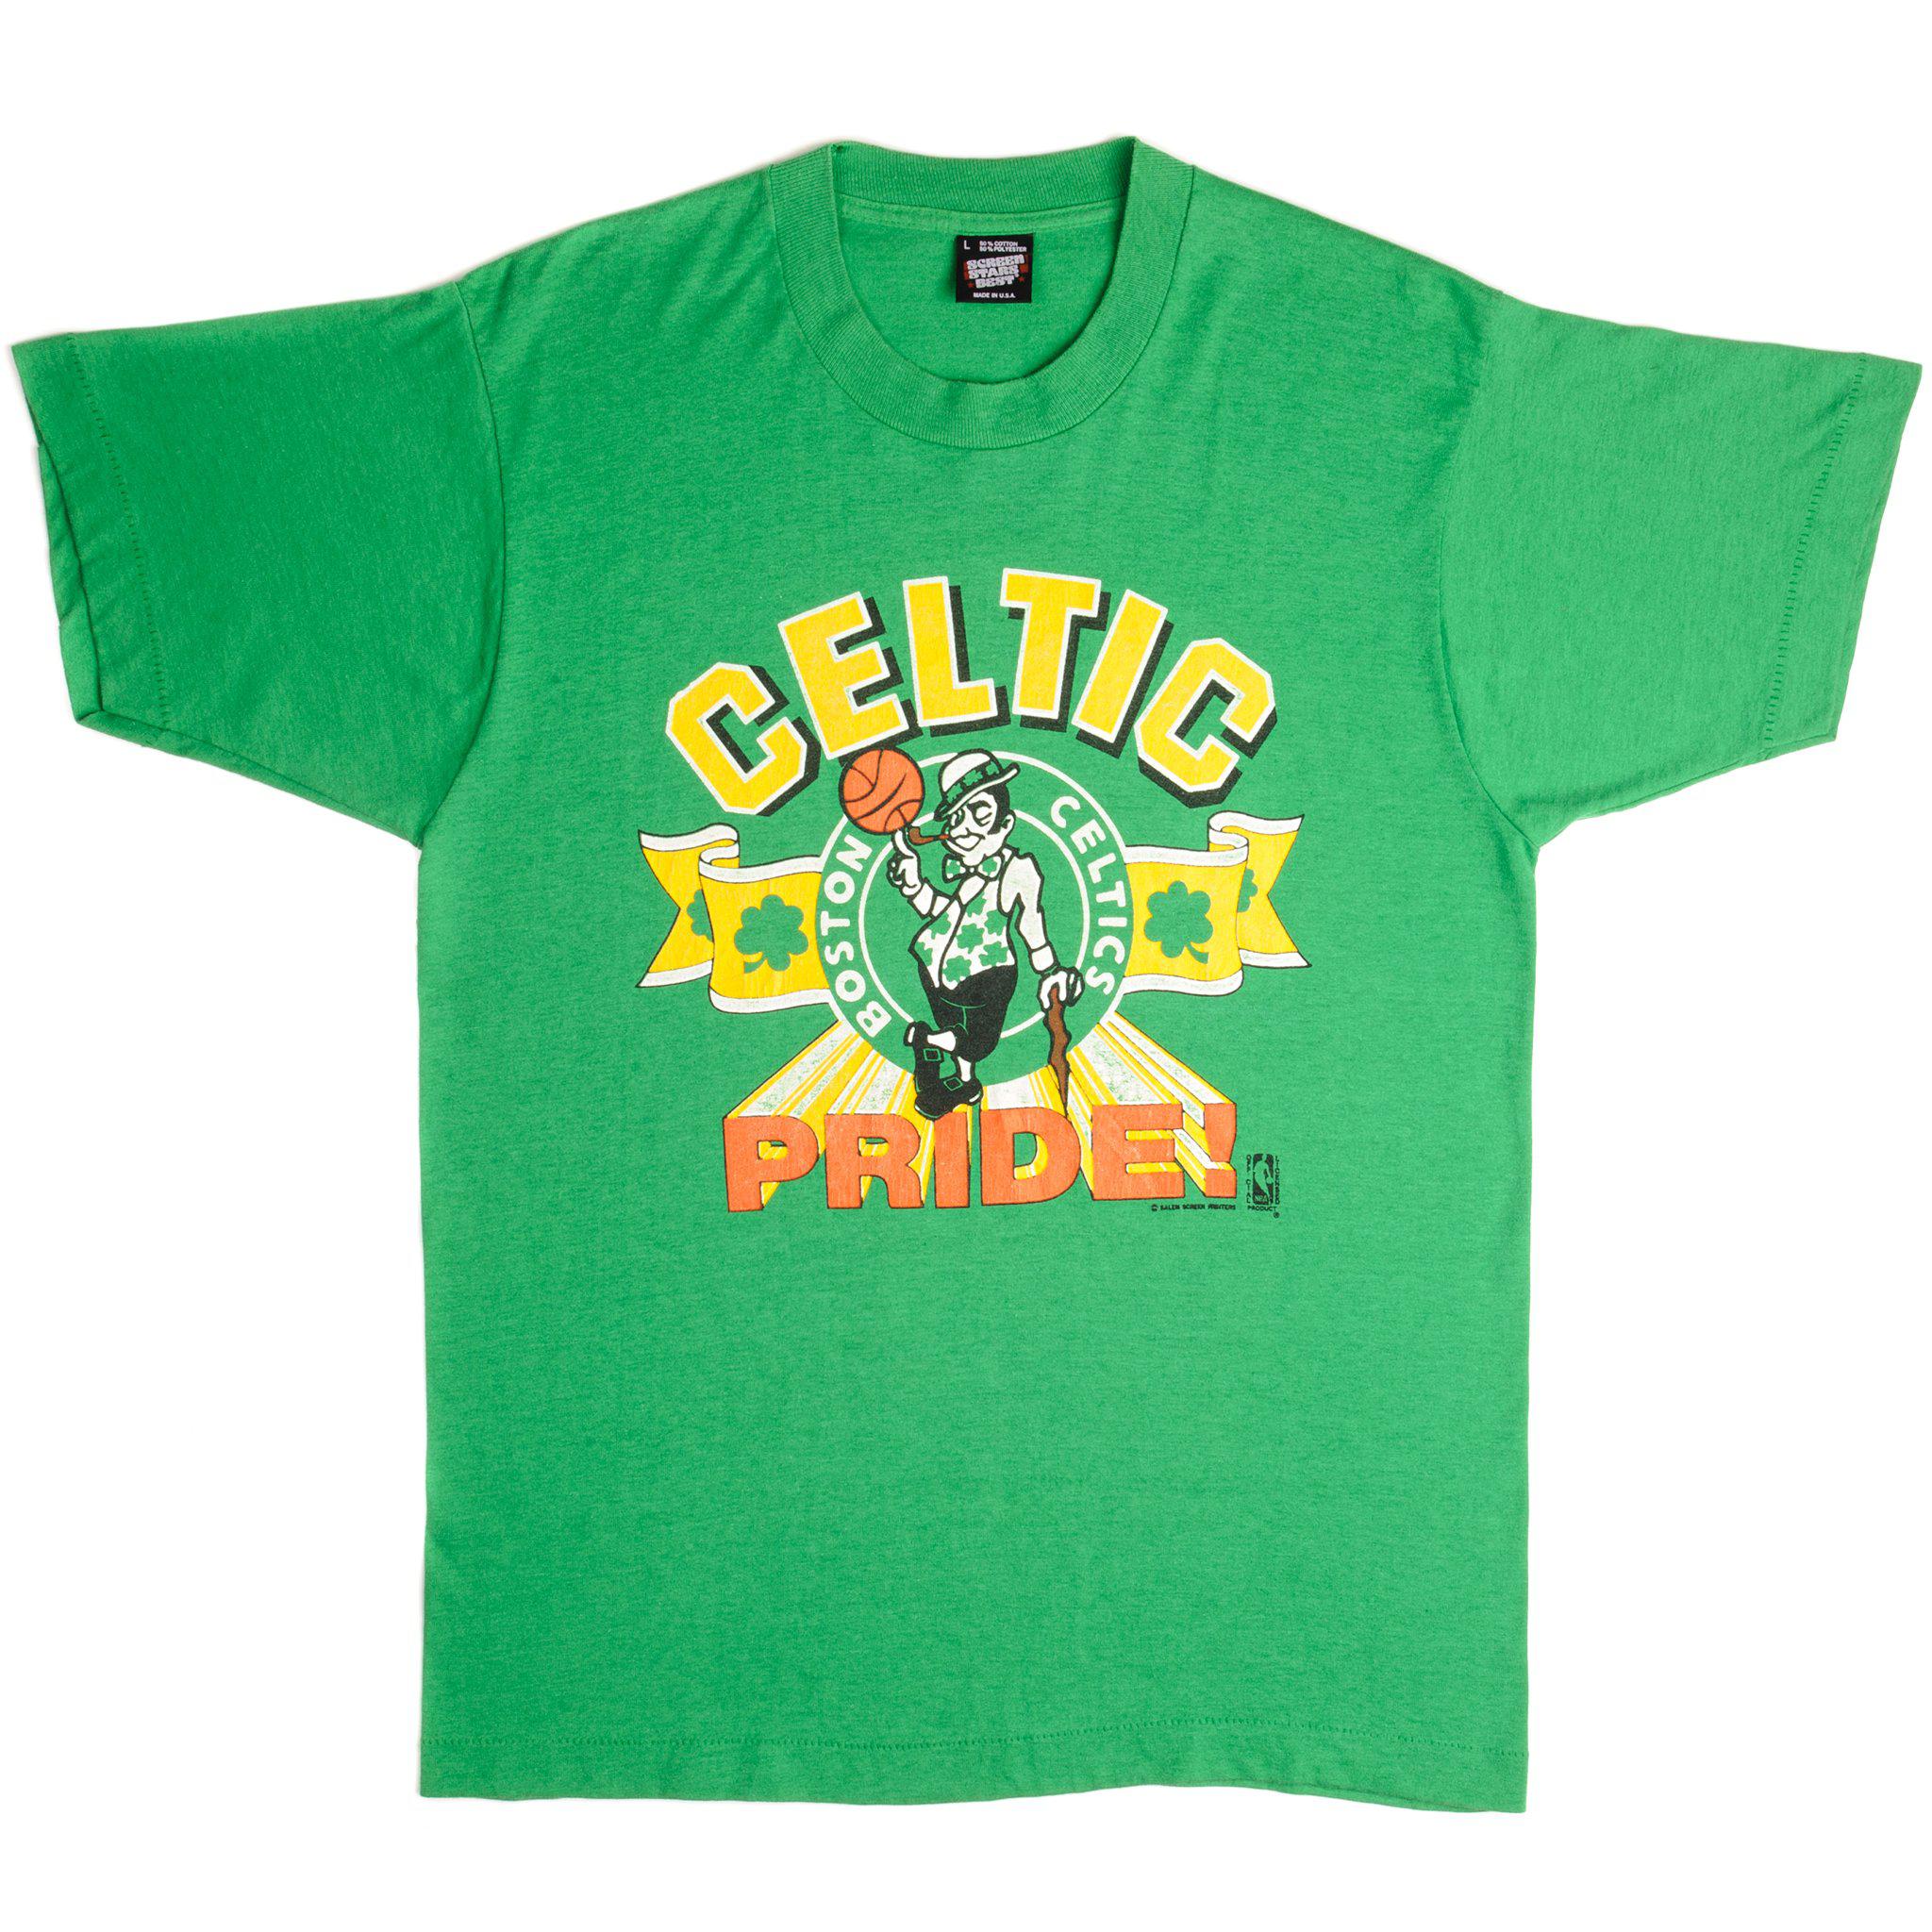 Boston Celtics Pride Graphic T-Shirt - Womens